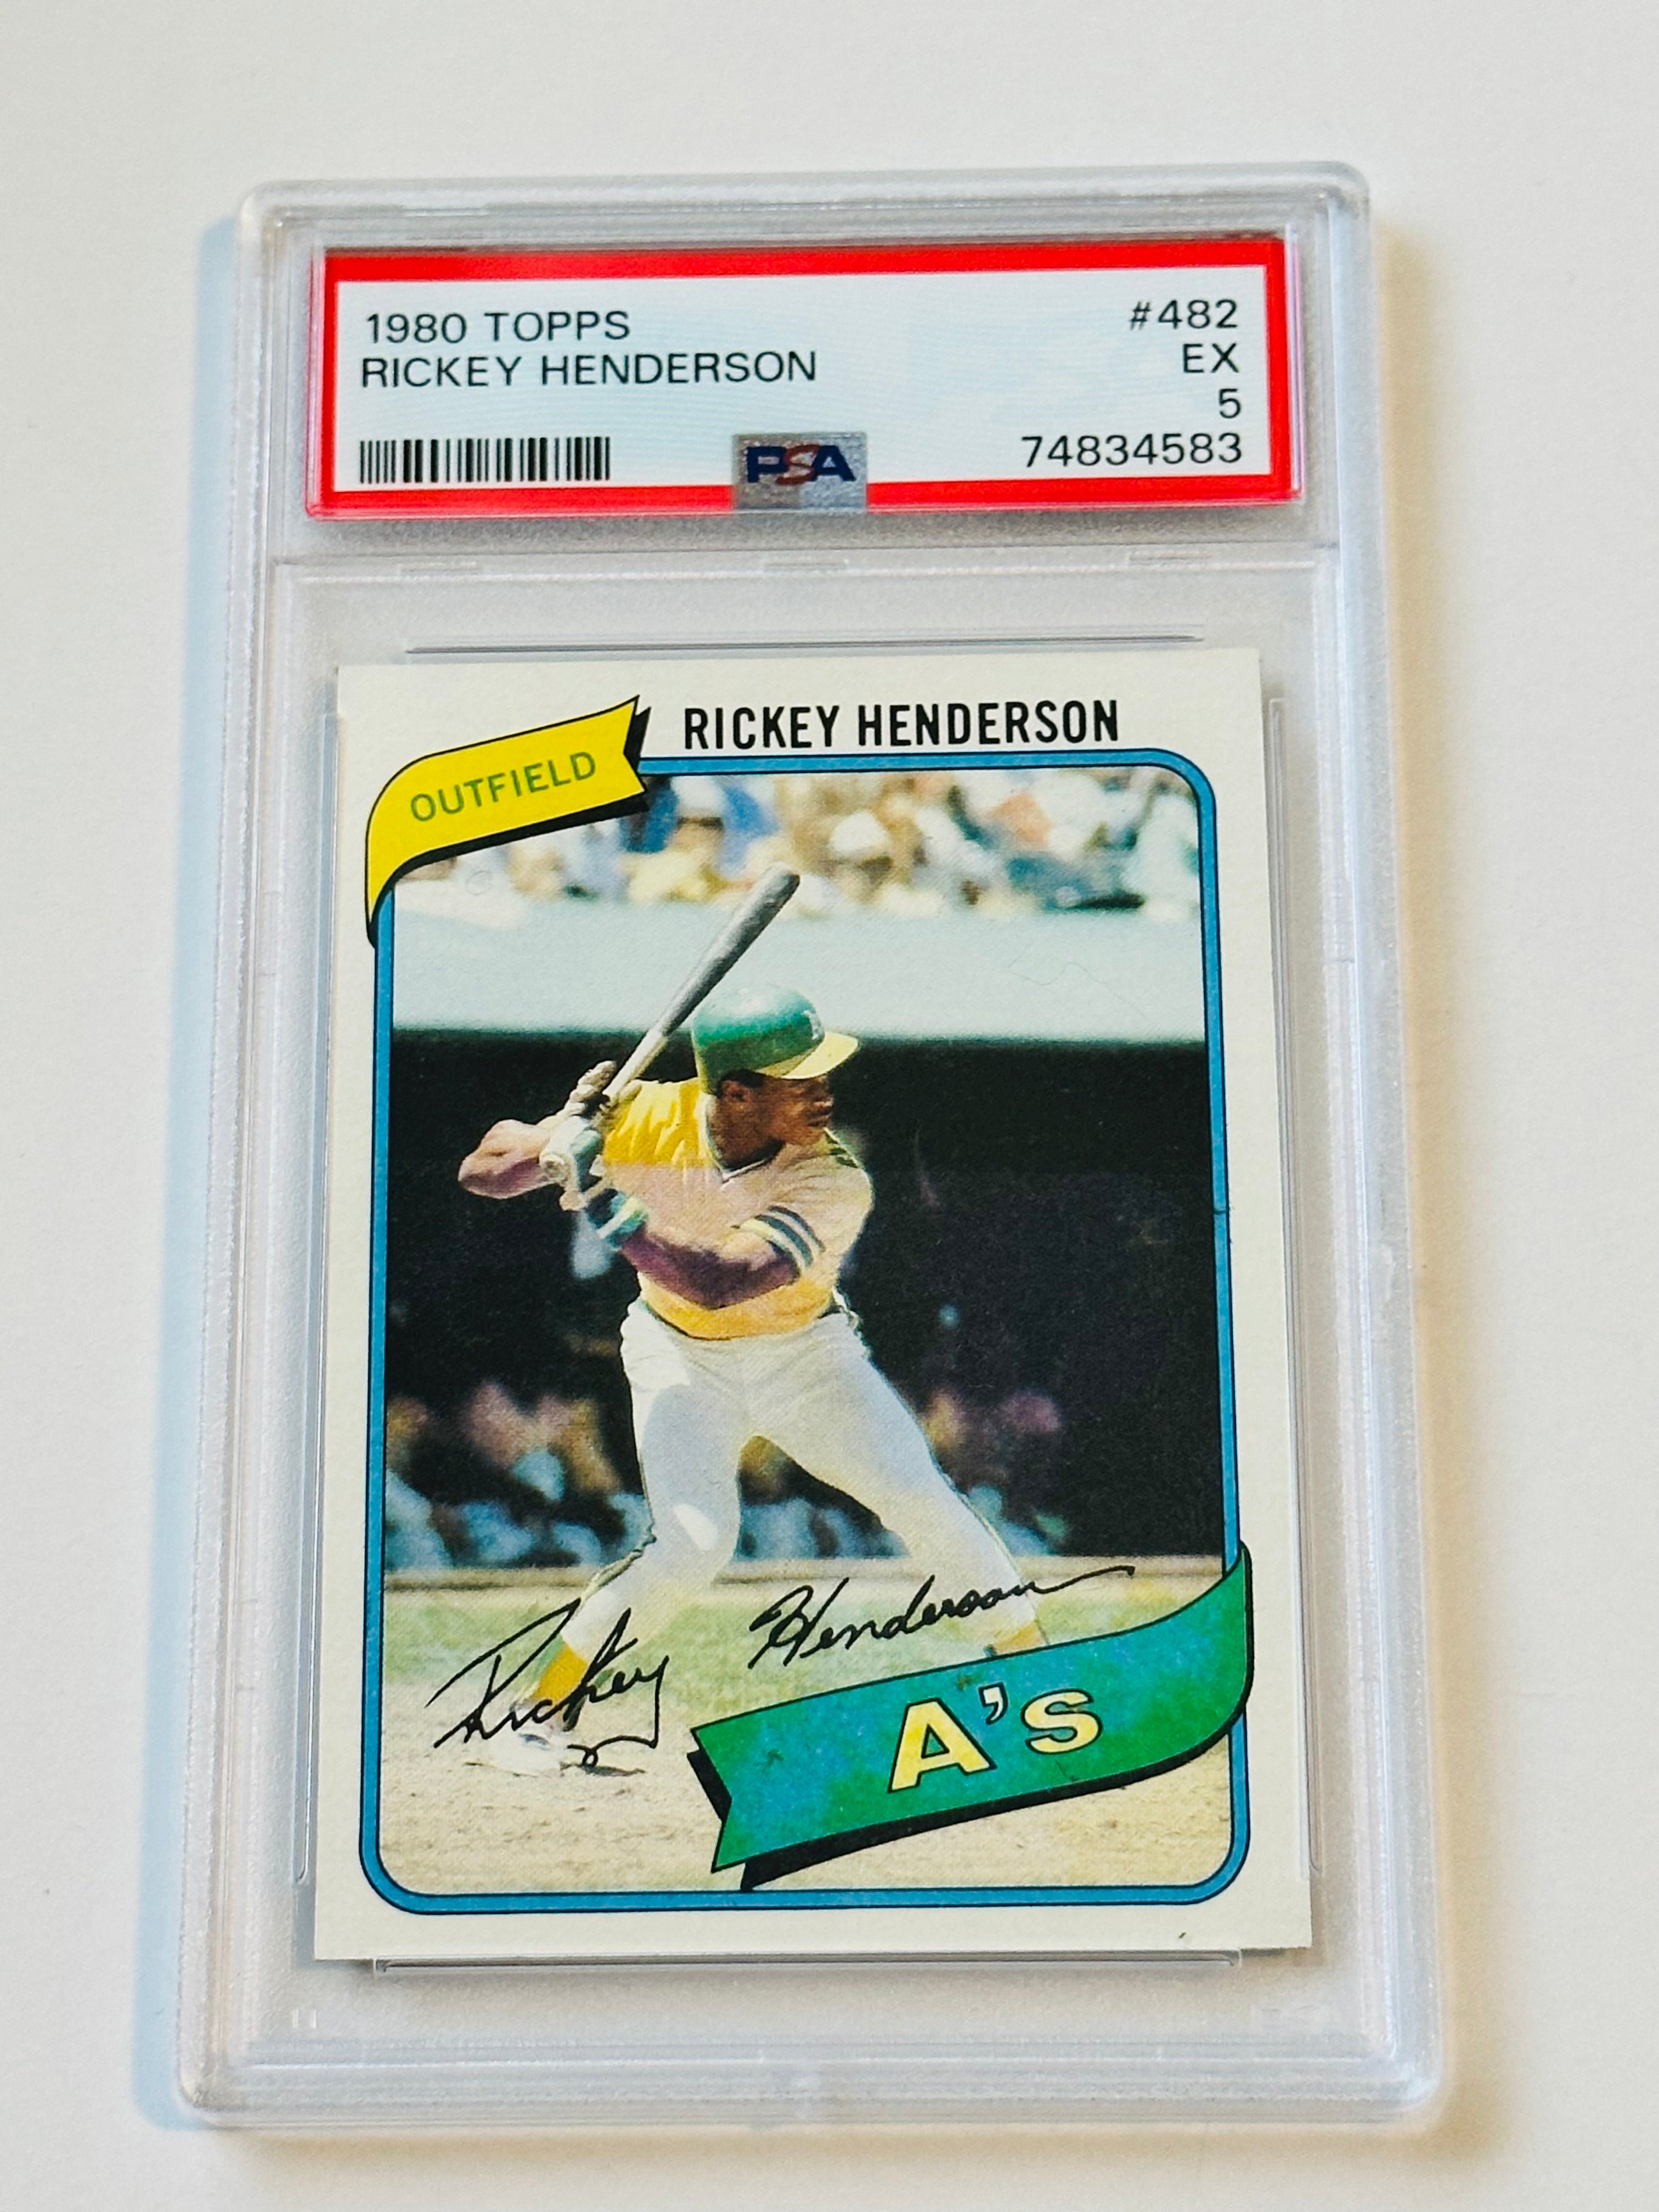 Rickey Henderson Topps rookie baseball legend PSA 5 graded baseball card 1980